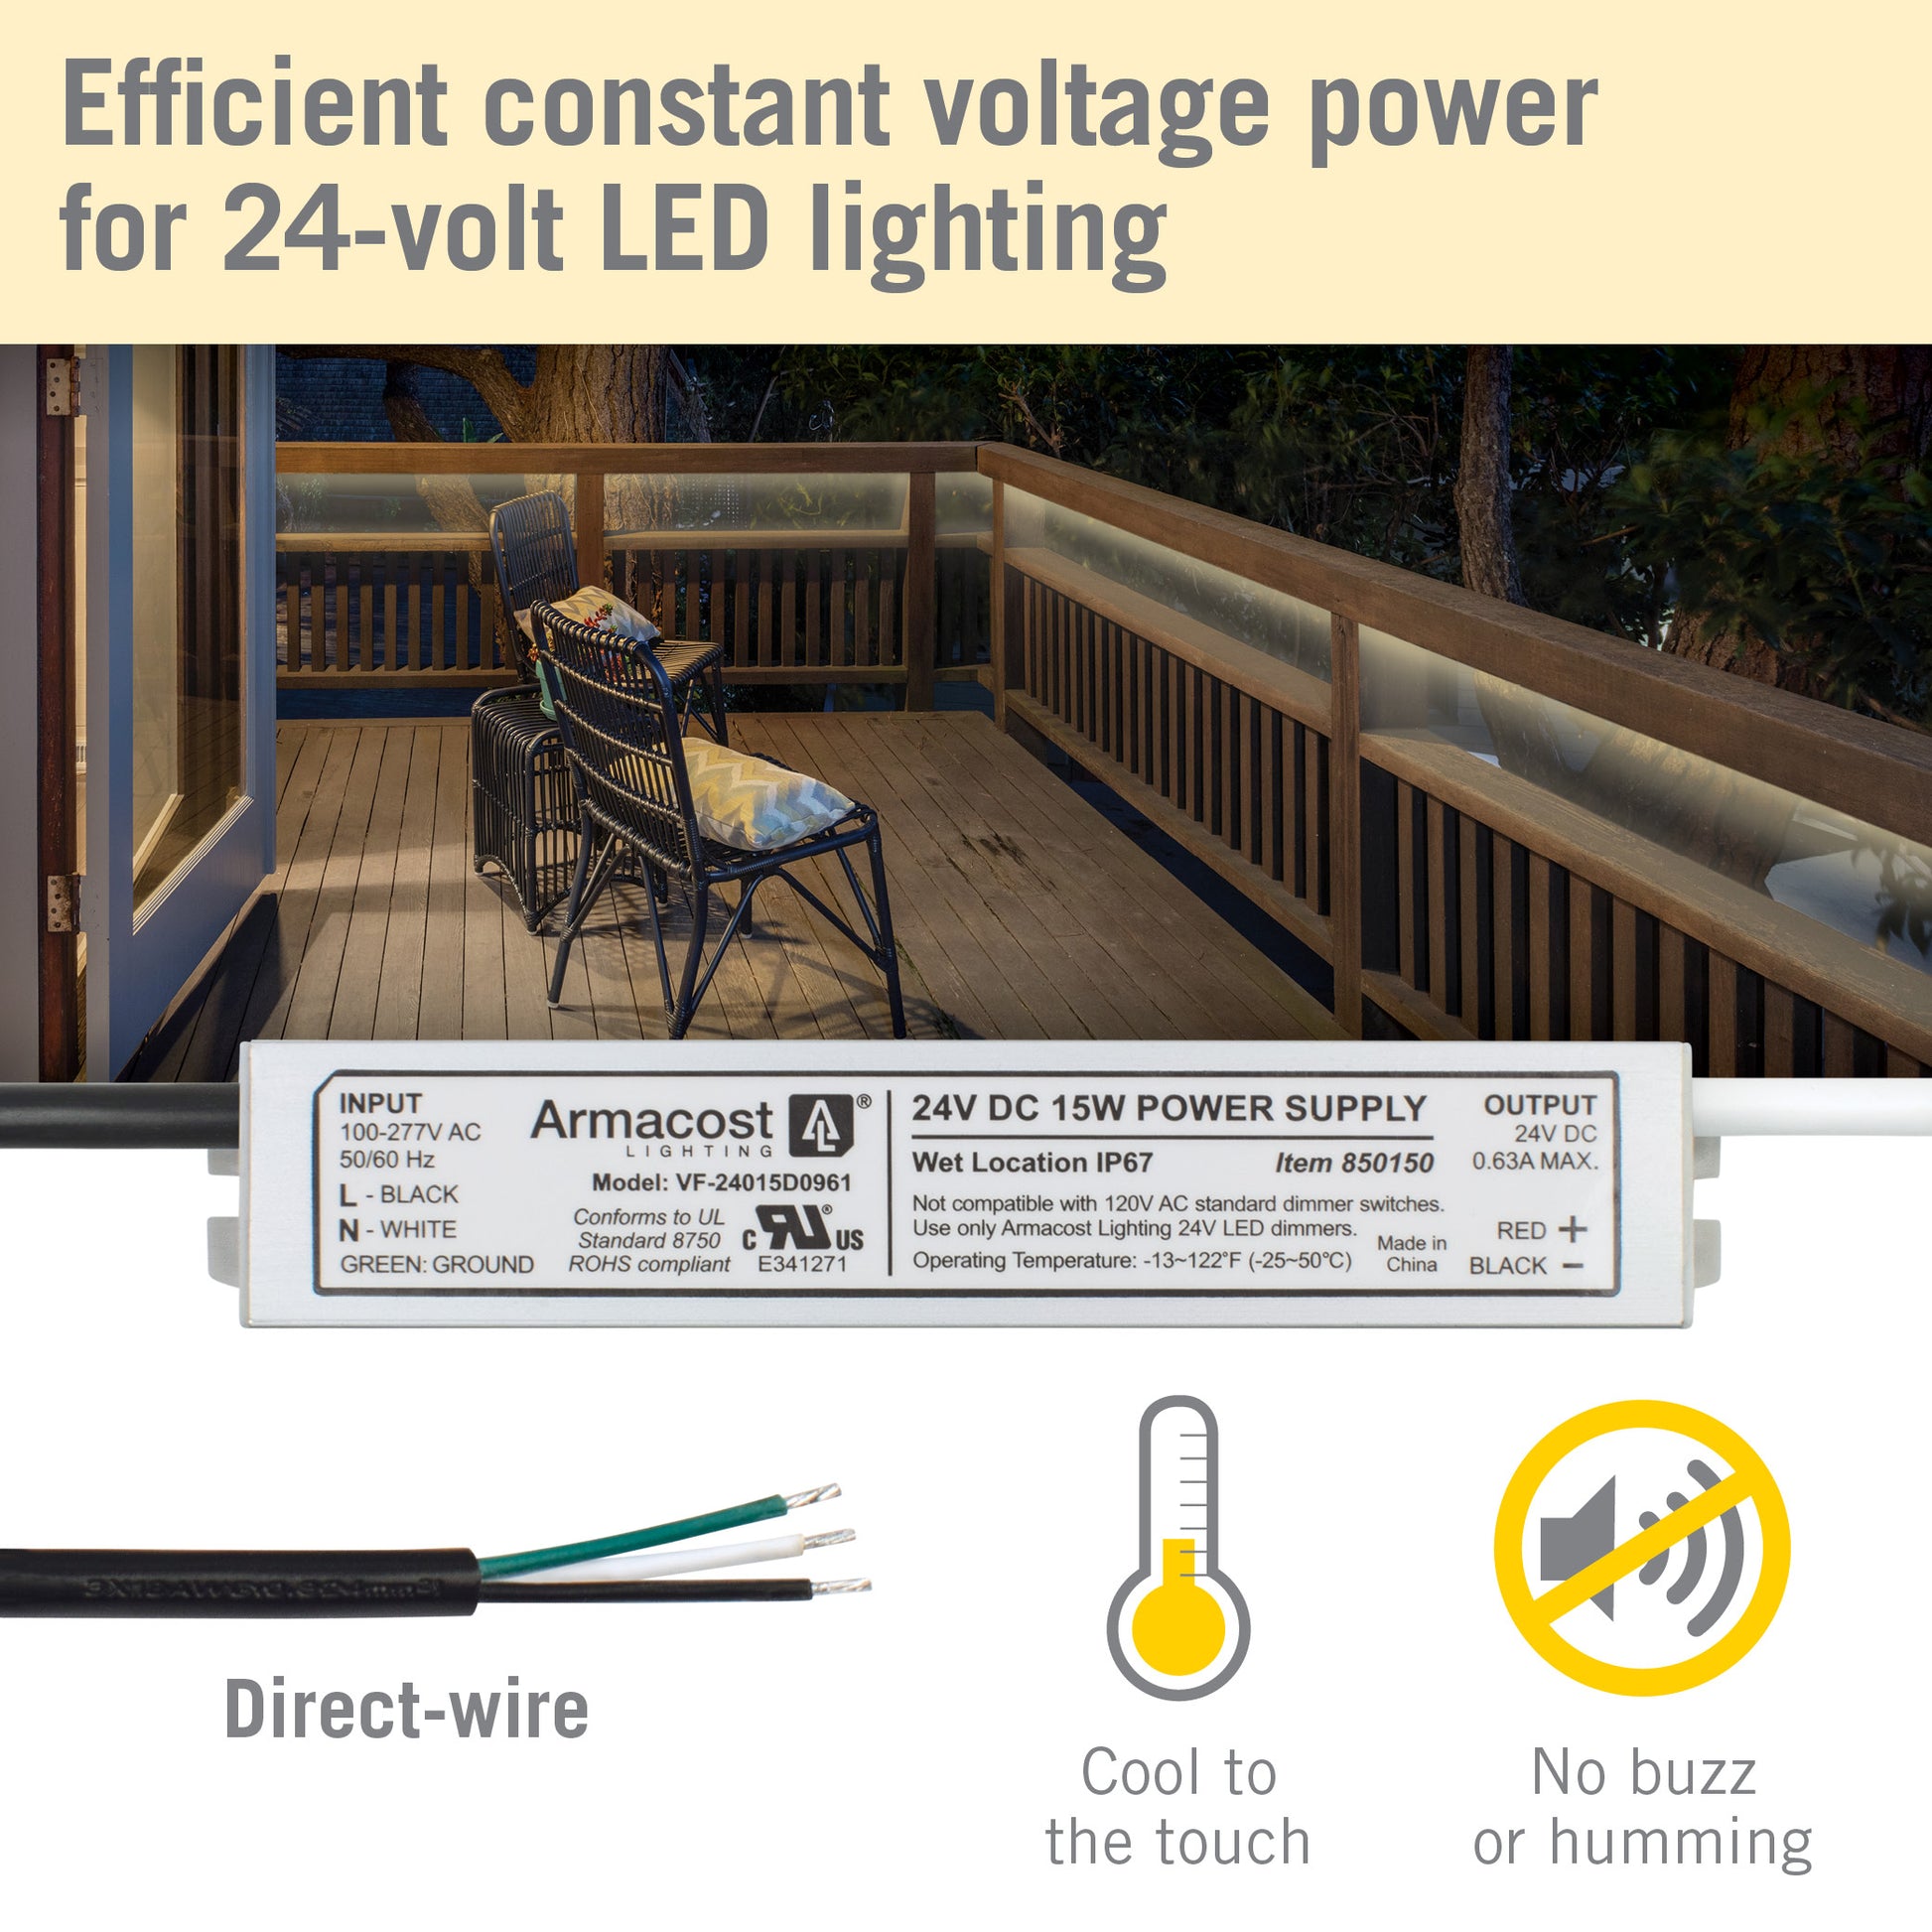 Armacost Lighting Alimentation standard du transformateur LED CC 24 Volts  de 150 watts